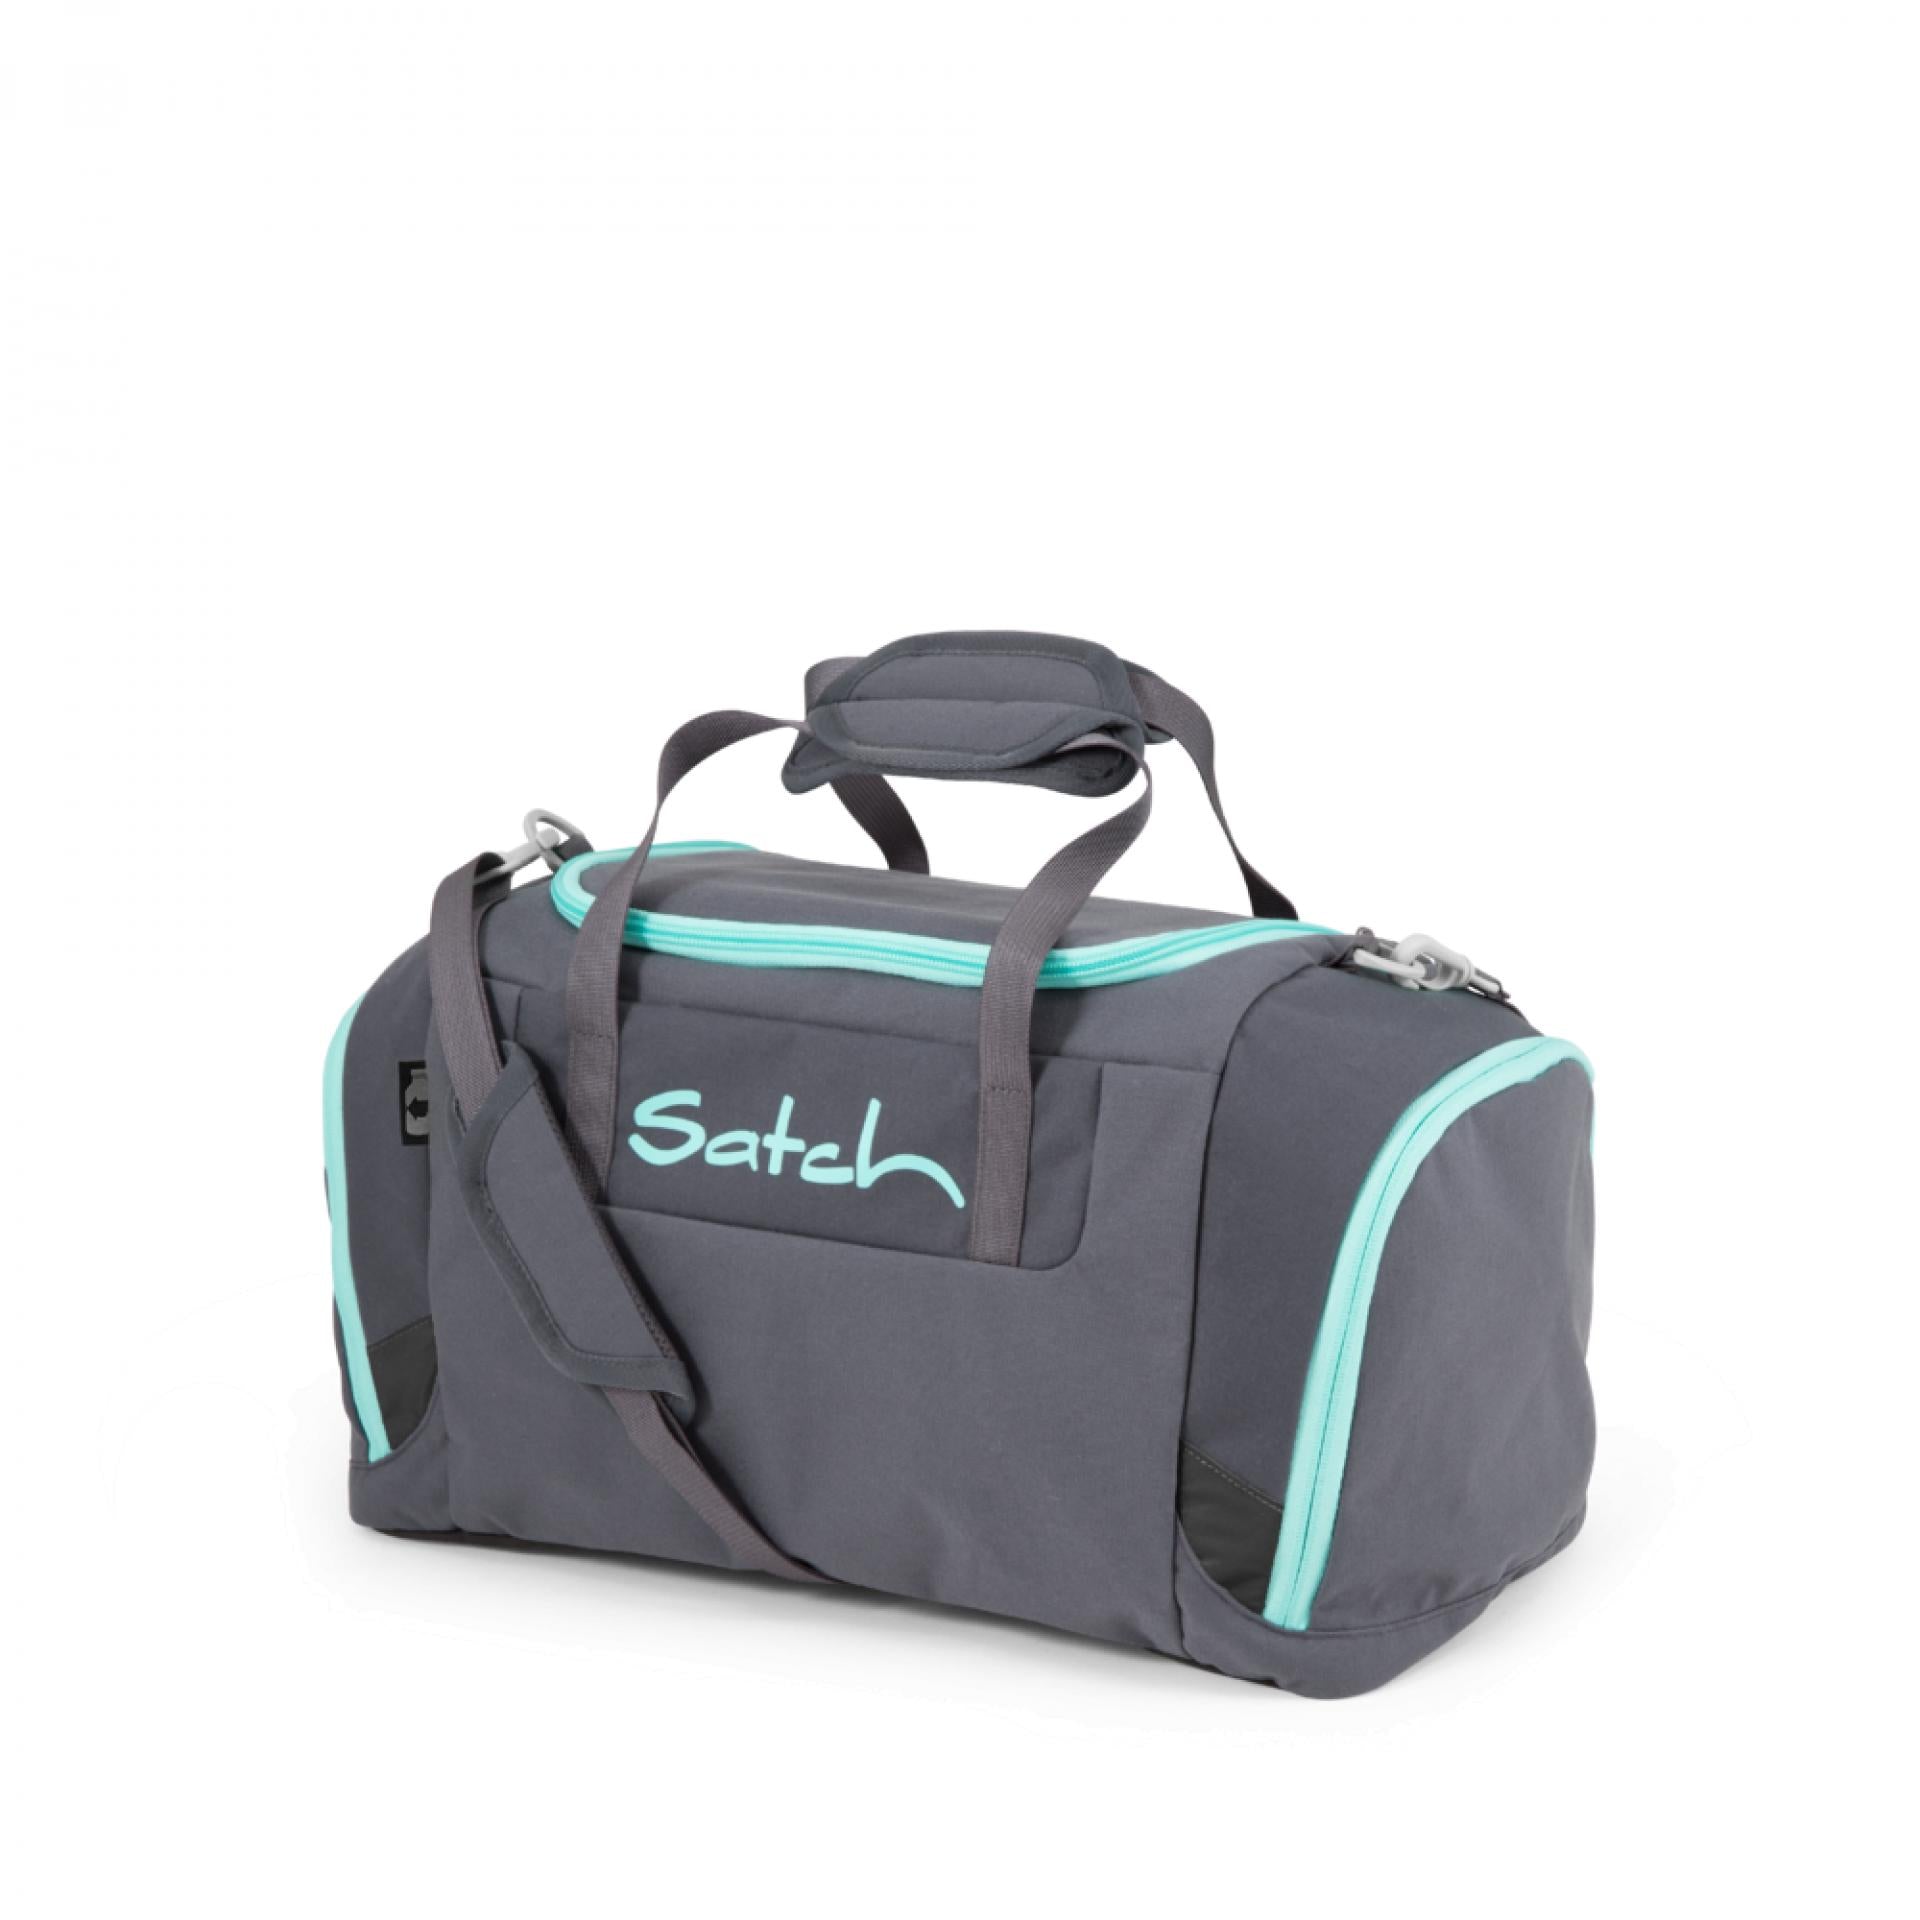 Satch Sporttasche - Farbe: Mint Phantom